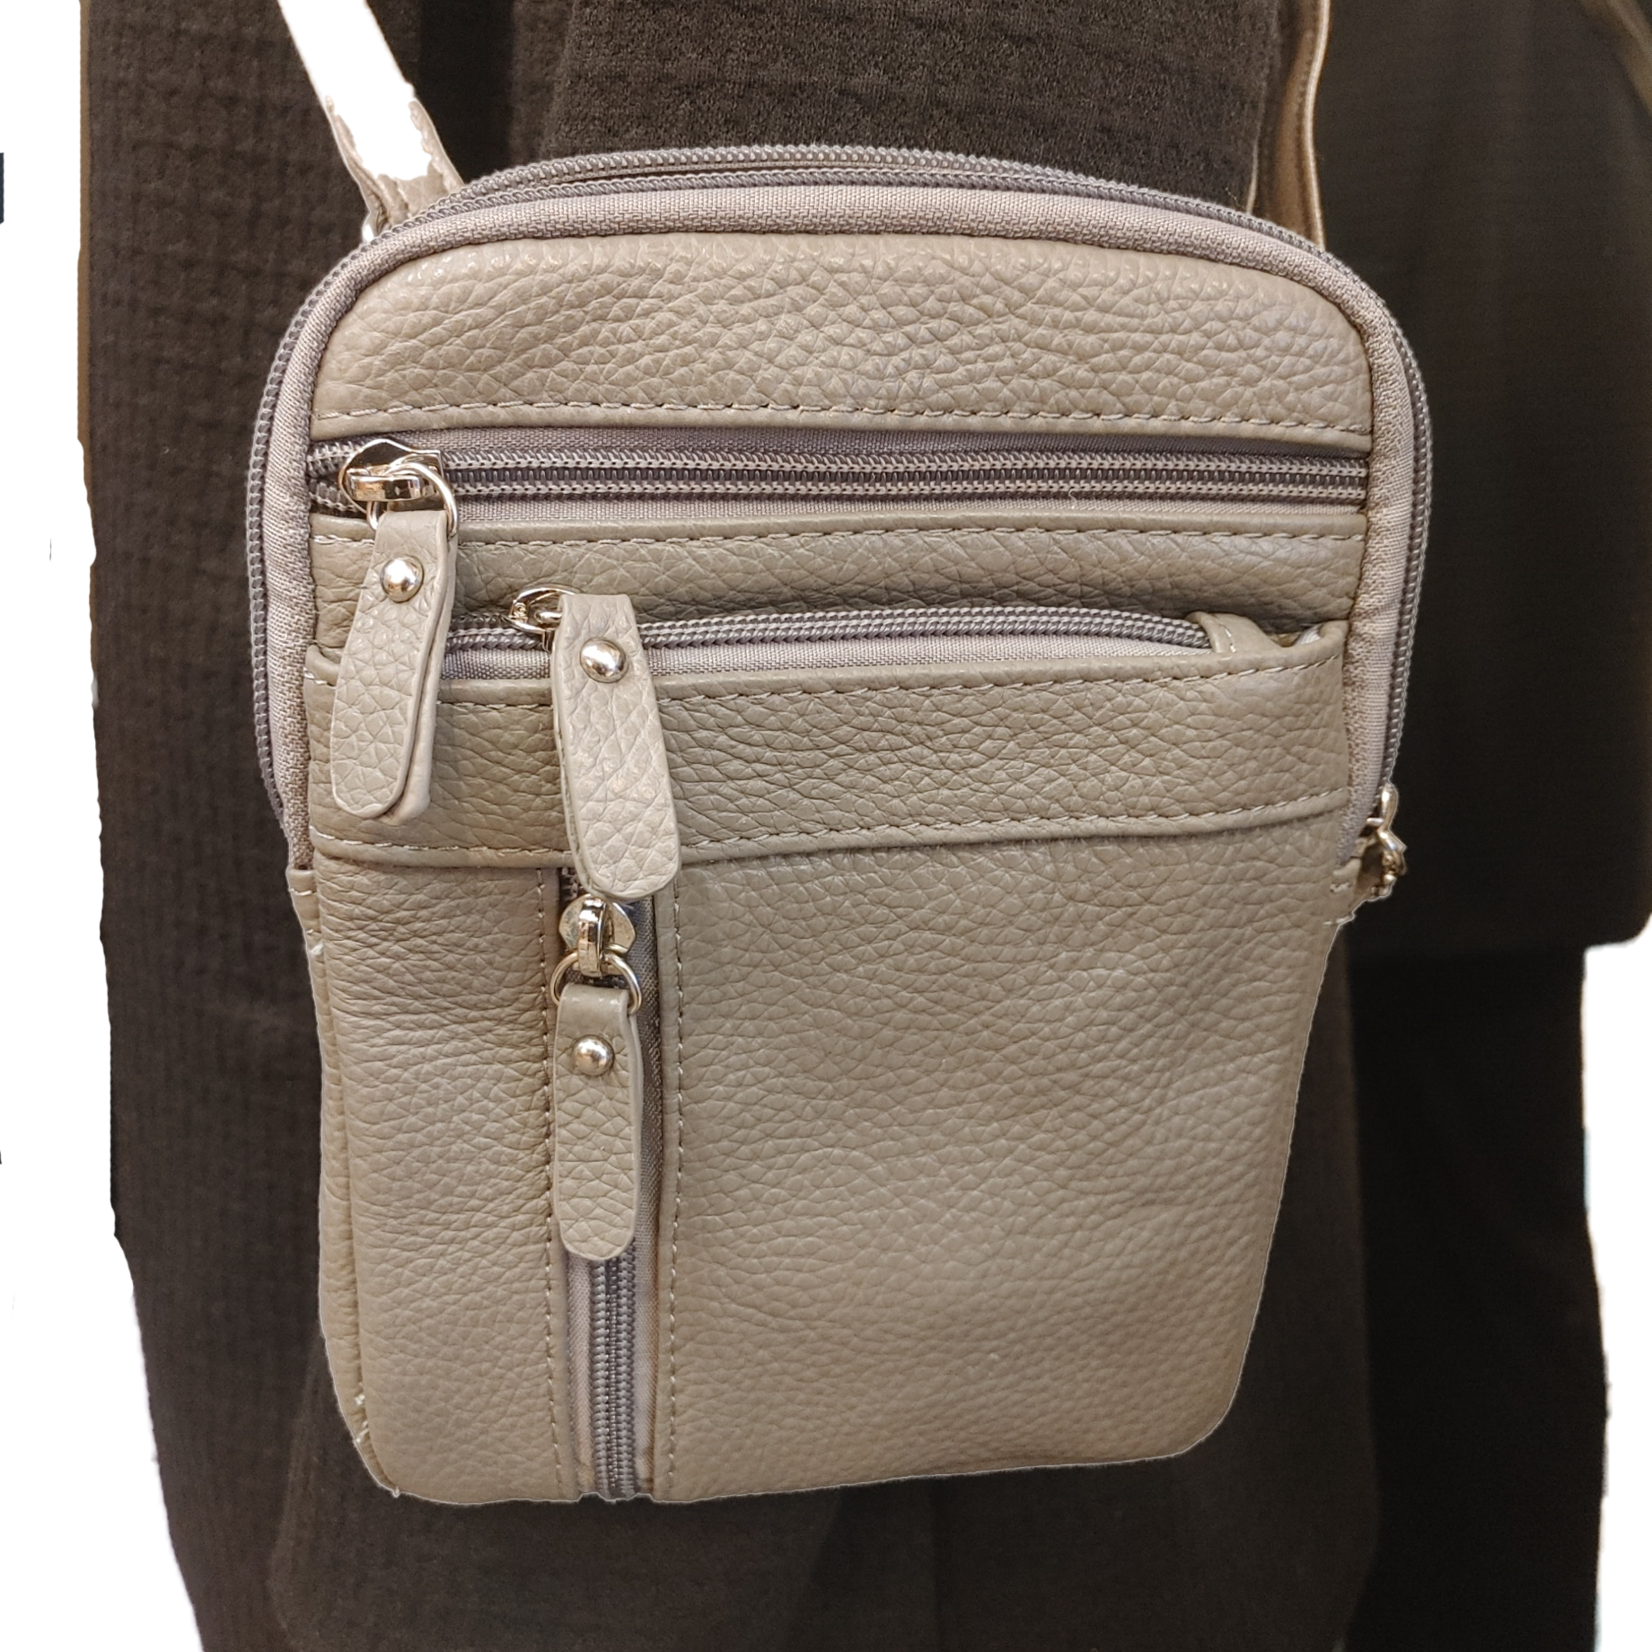 Picabo Picabo travel bag crossbody purse